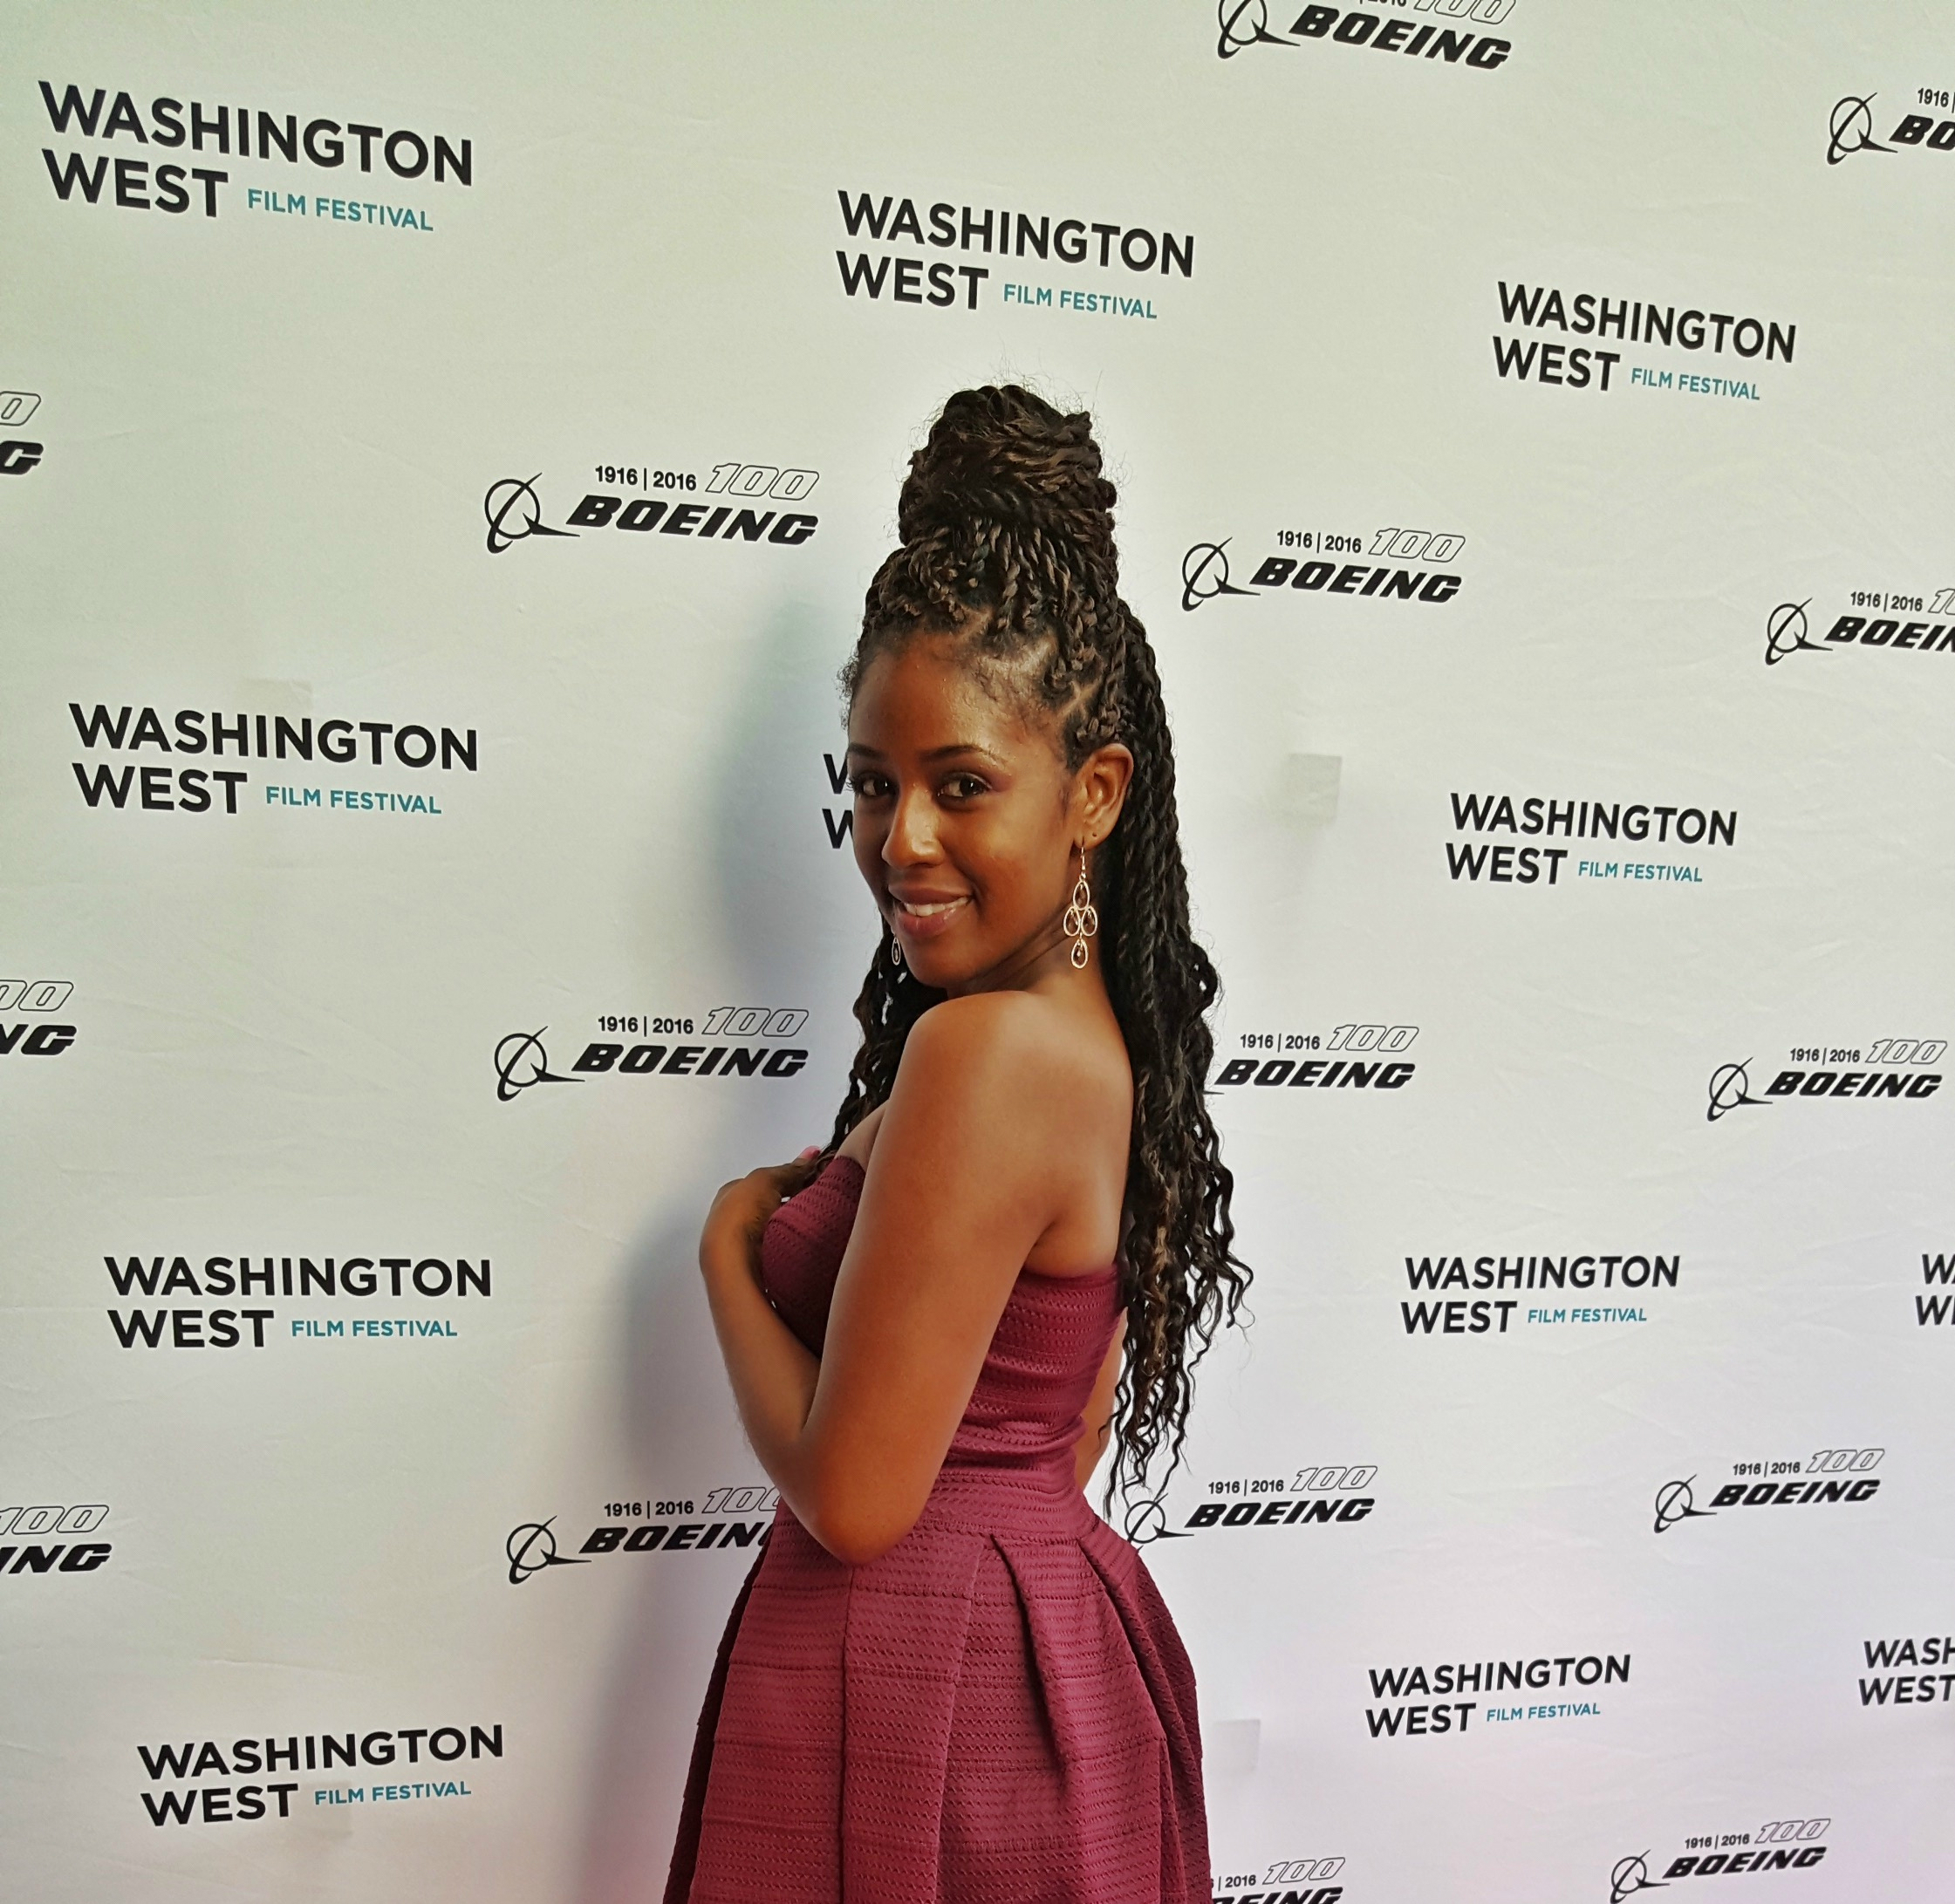 Washington West Film Festival 2015